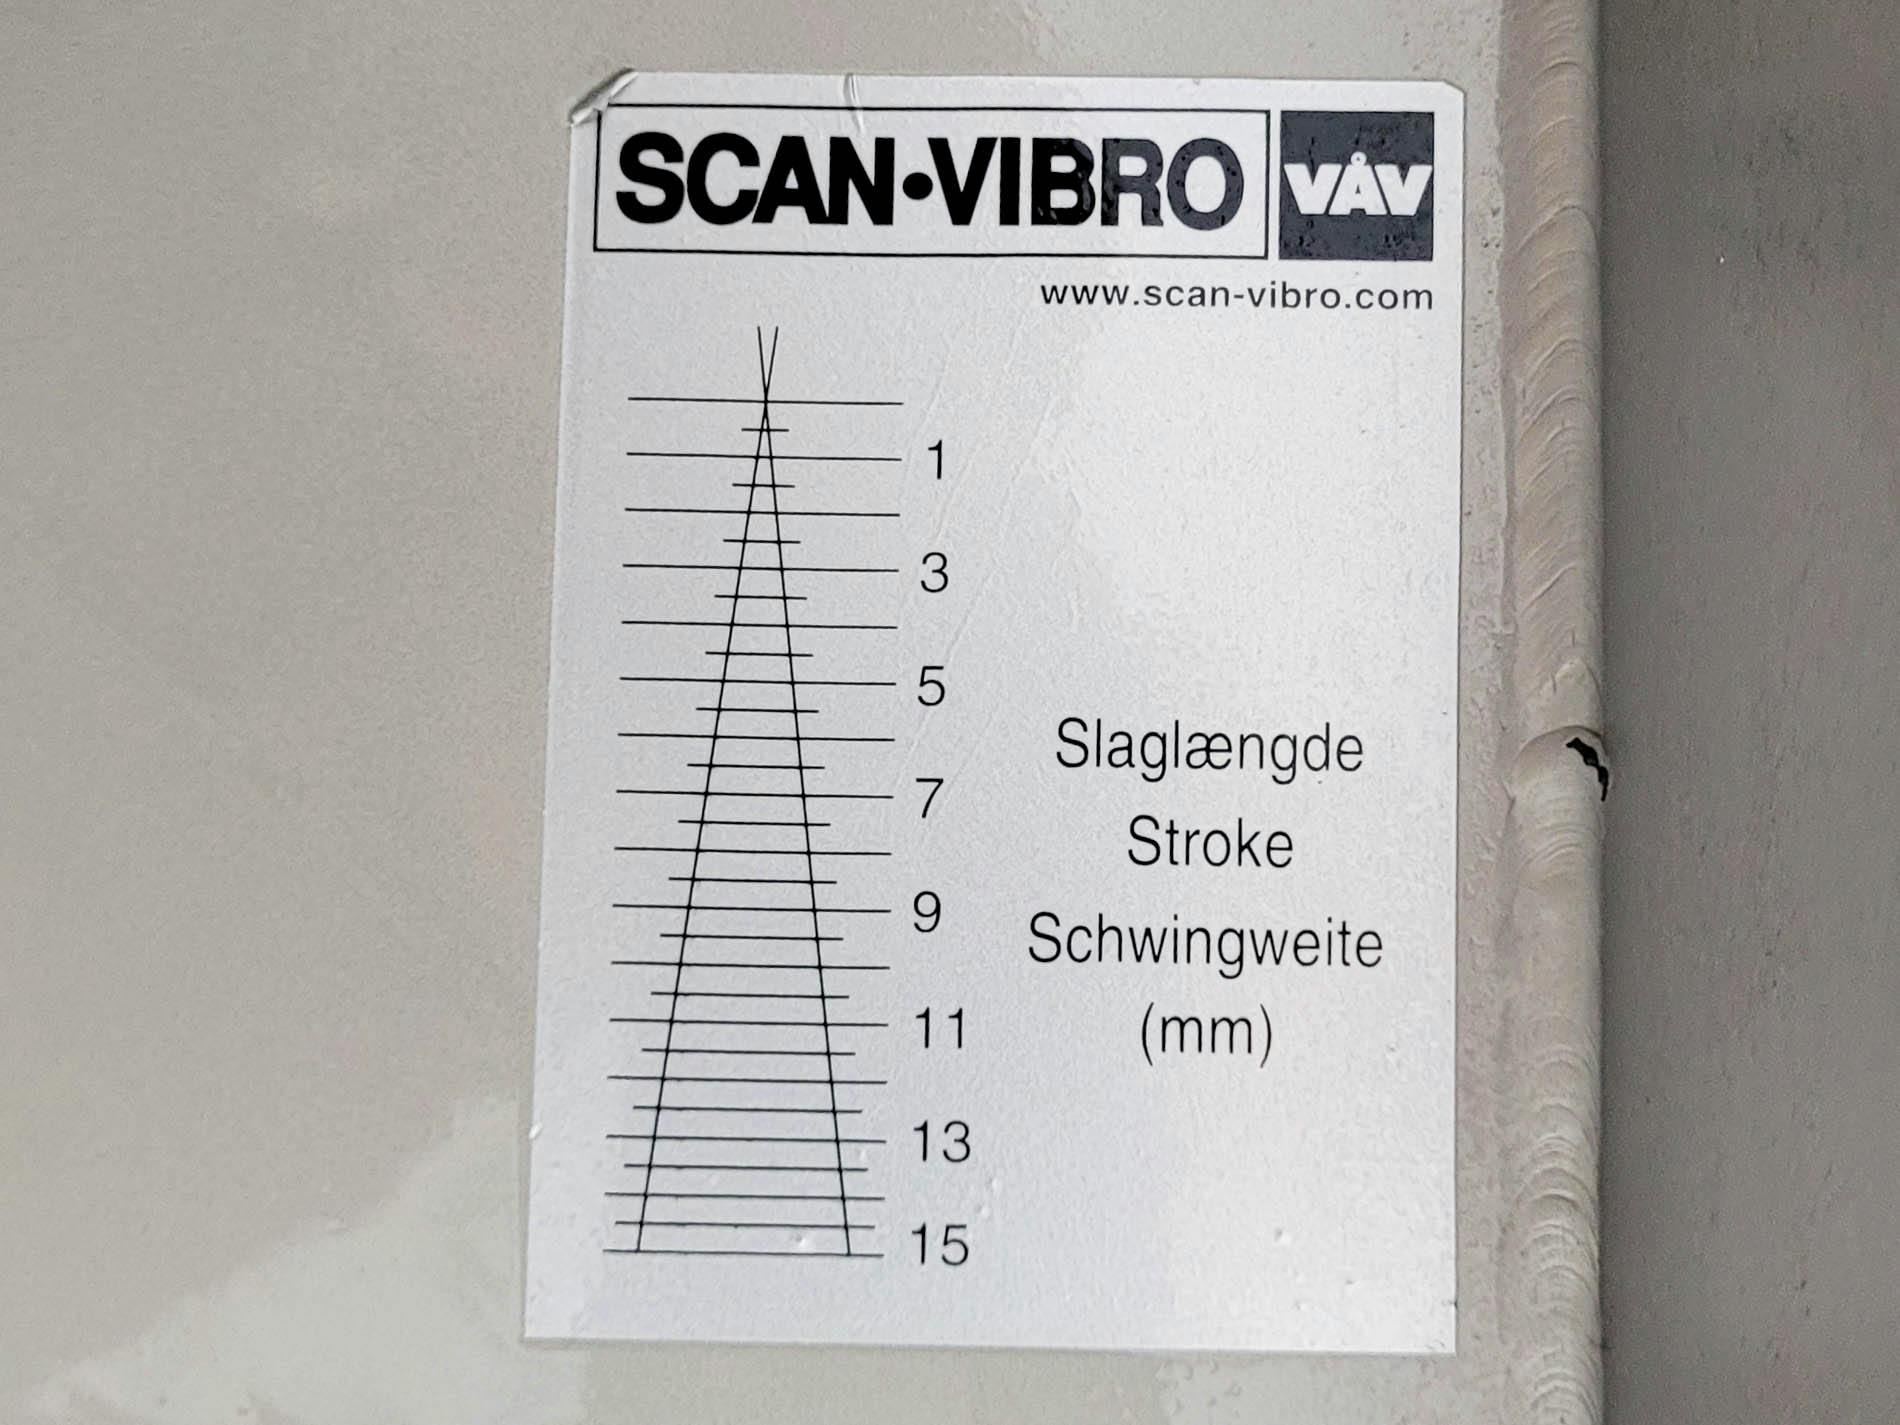 VAV Scan-Vibro TRS 300 x 1019 - Vibro feeder - image 15